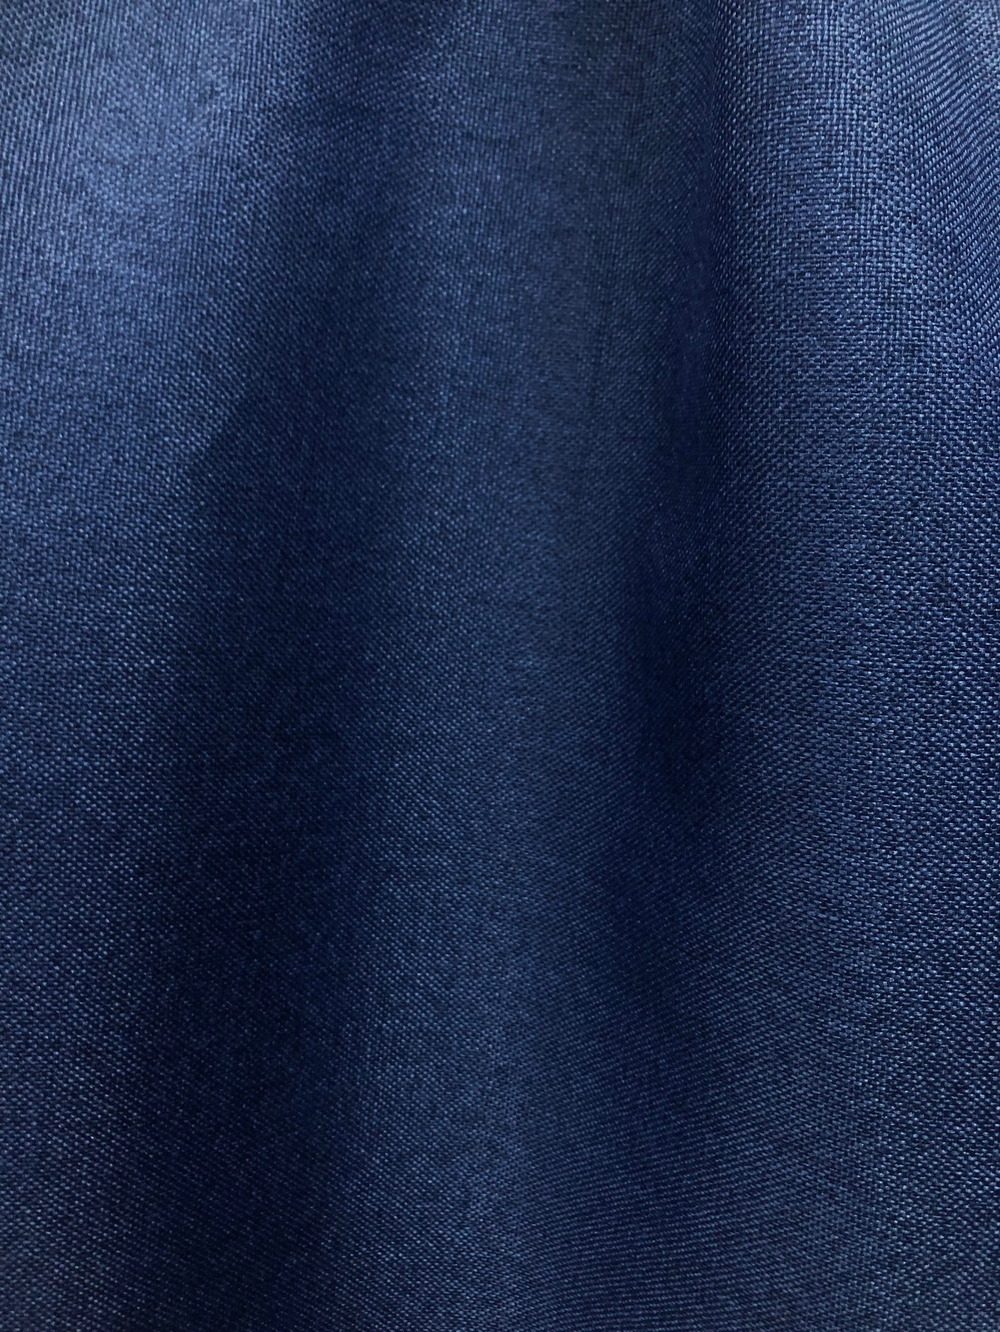 Ткань портьерная Блэкаут-лен, цвет синий, артикул 327743